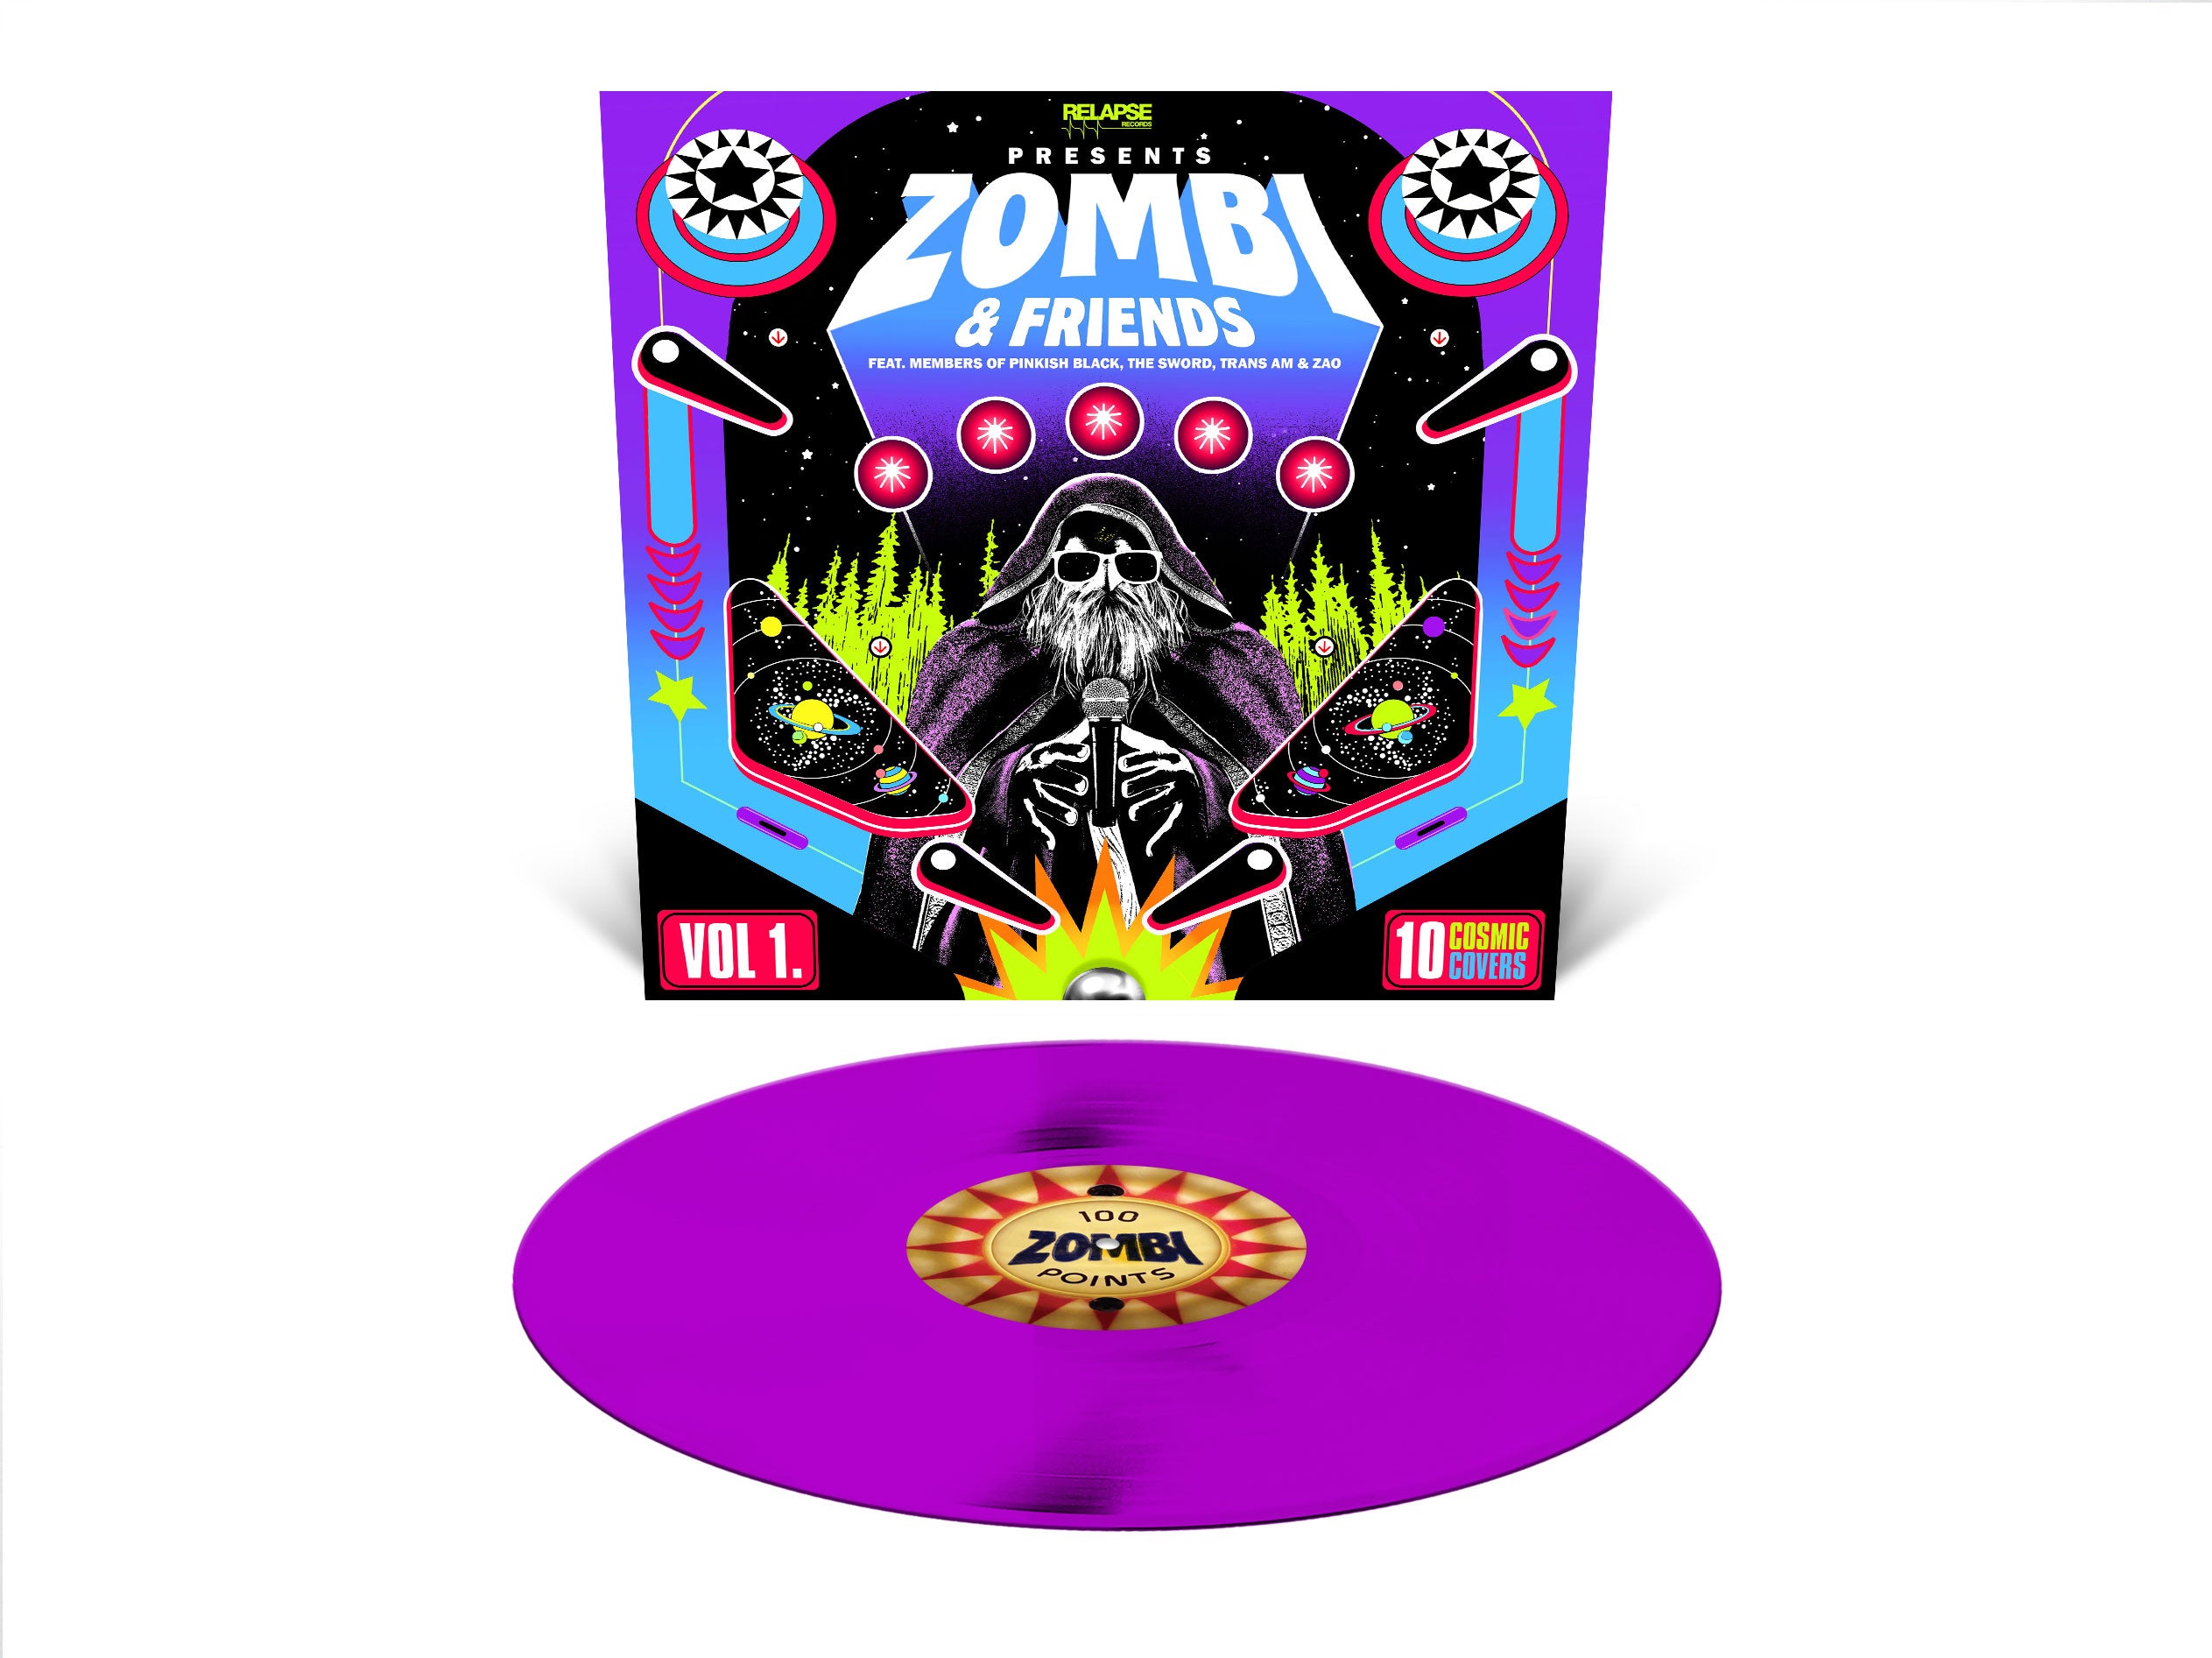 Zombi- Zombi & Friends, Vol 1 (Indie Exclusive) - Darkside Records